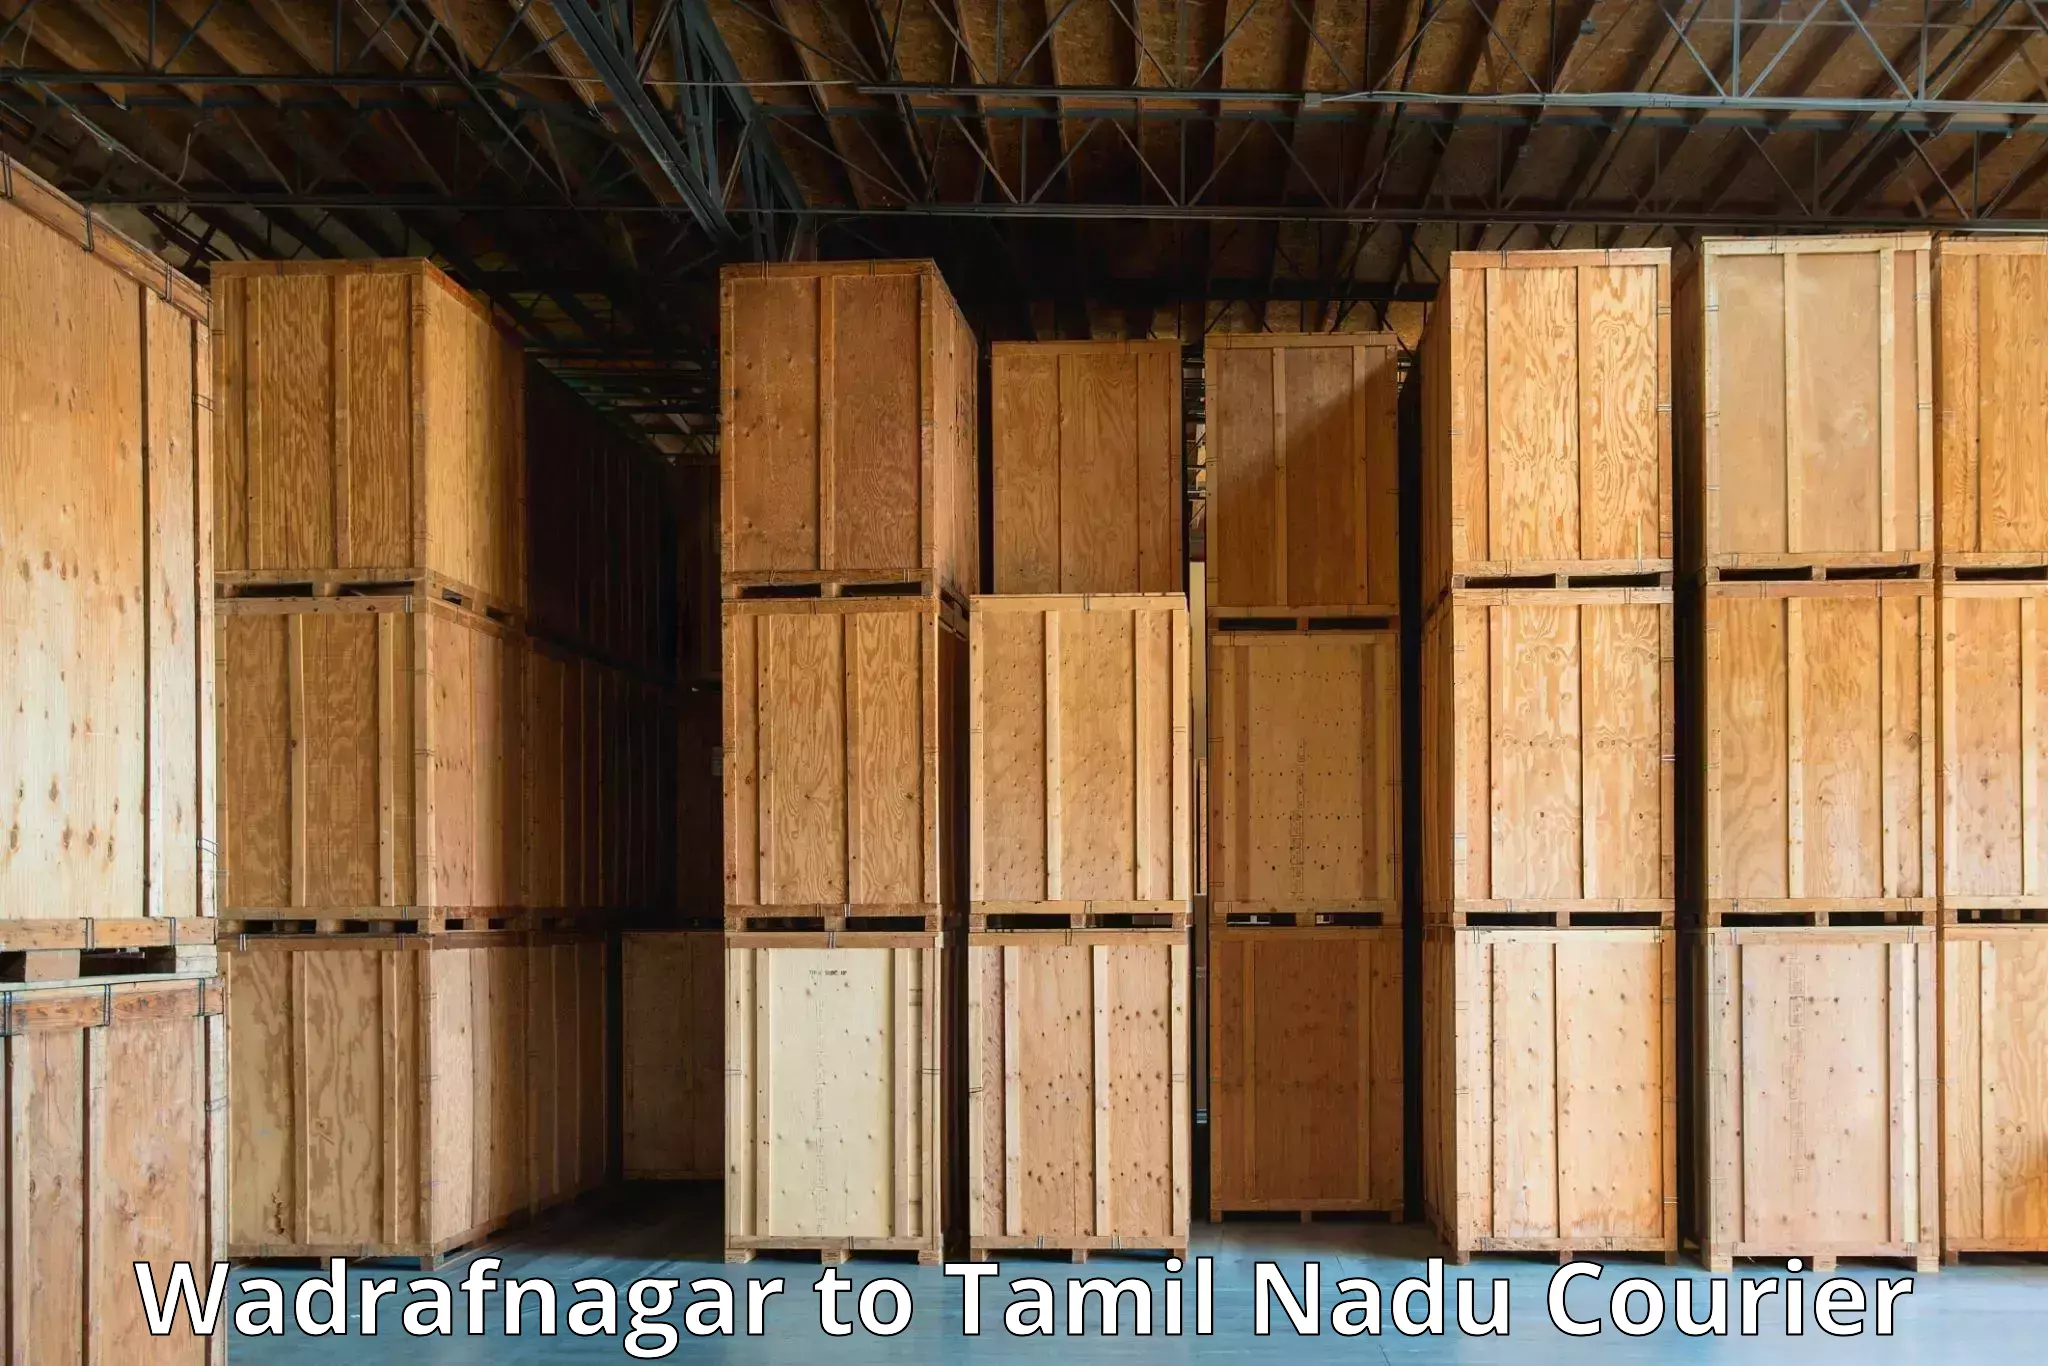 Customer-focused courier Wadrafnagar to Vickramasingapuram